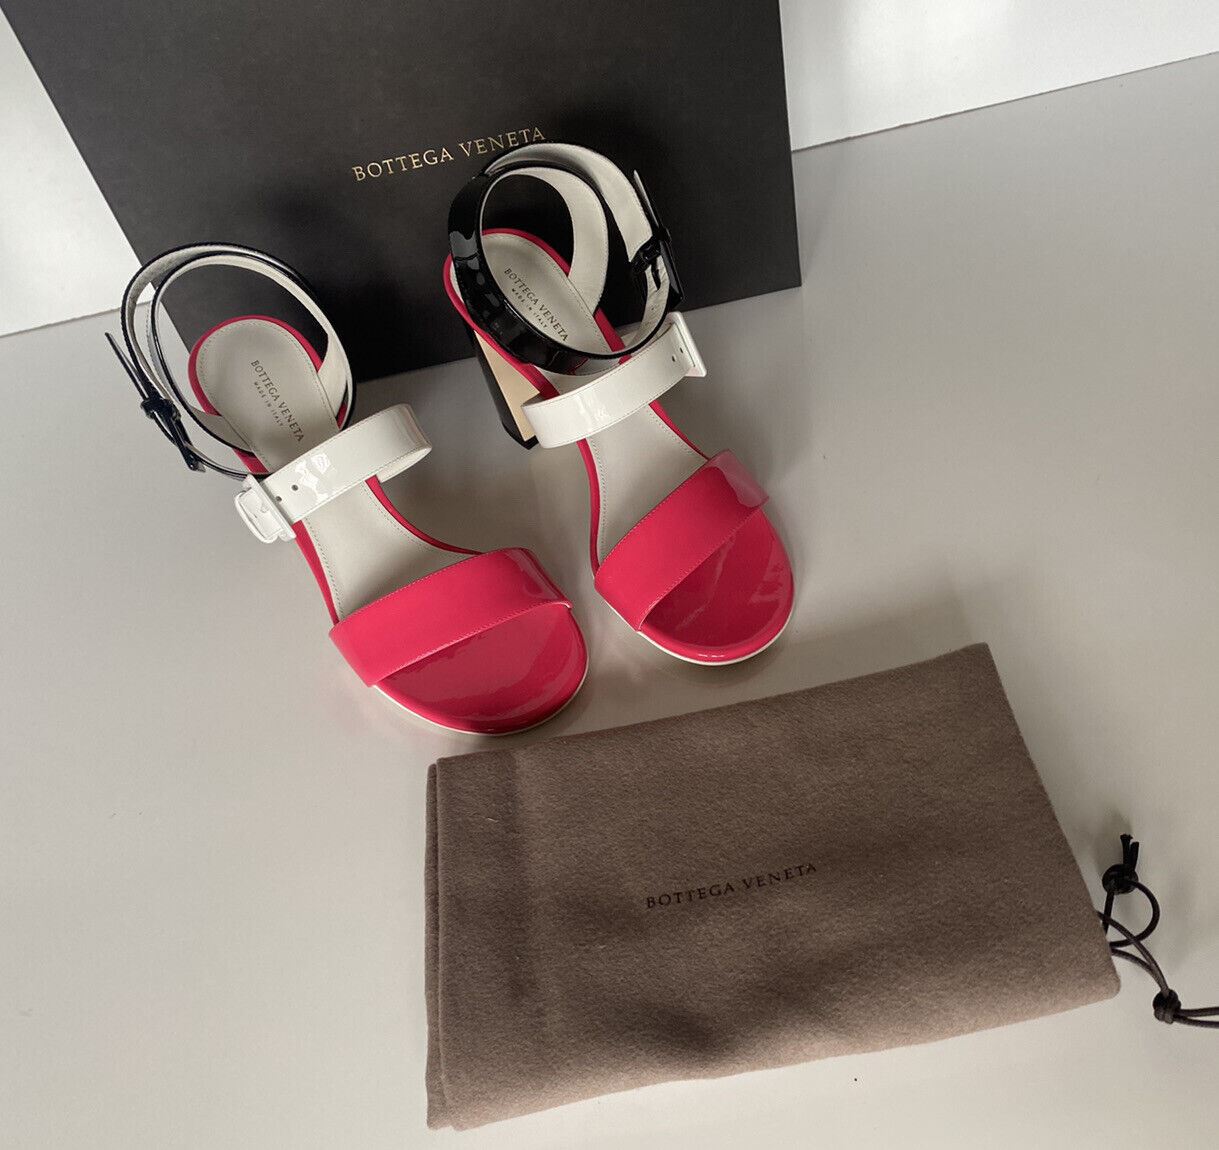 NIB $760 Bottega Veneta Strappy Block-heeled Patent Tricolor Sandals 8 US 565653